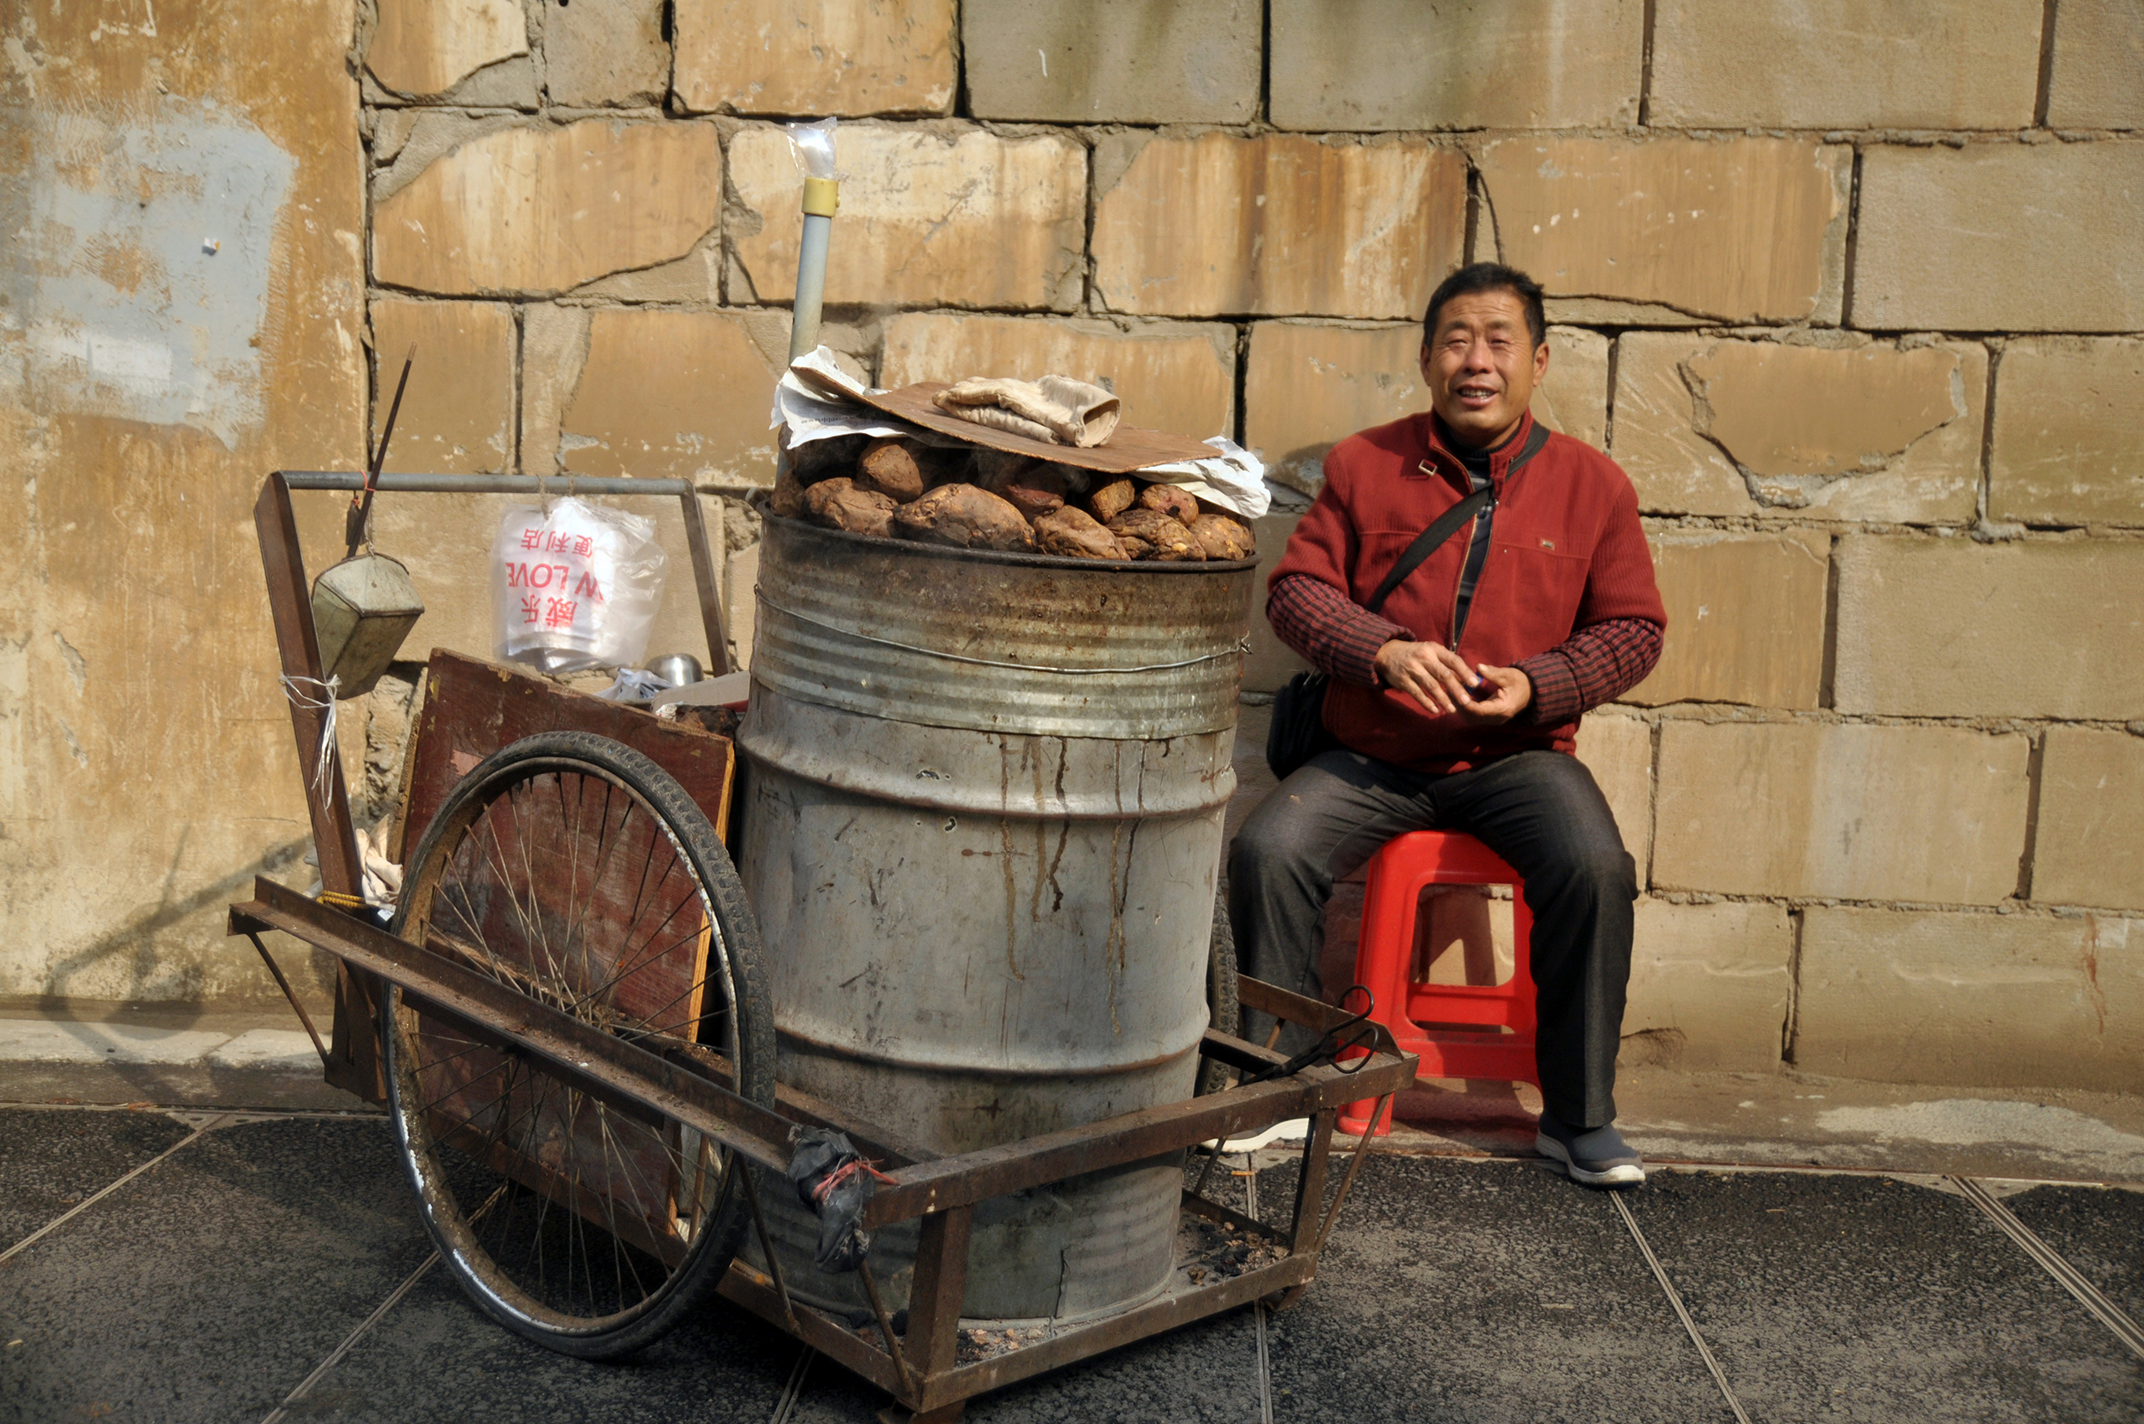  Street vendor, Wuhan 